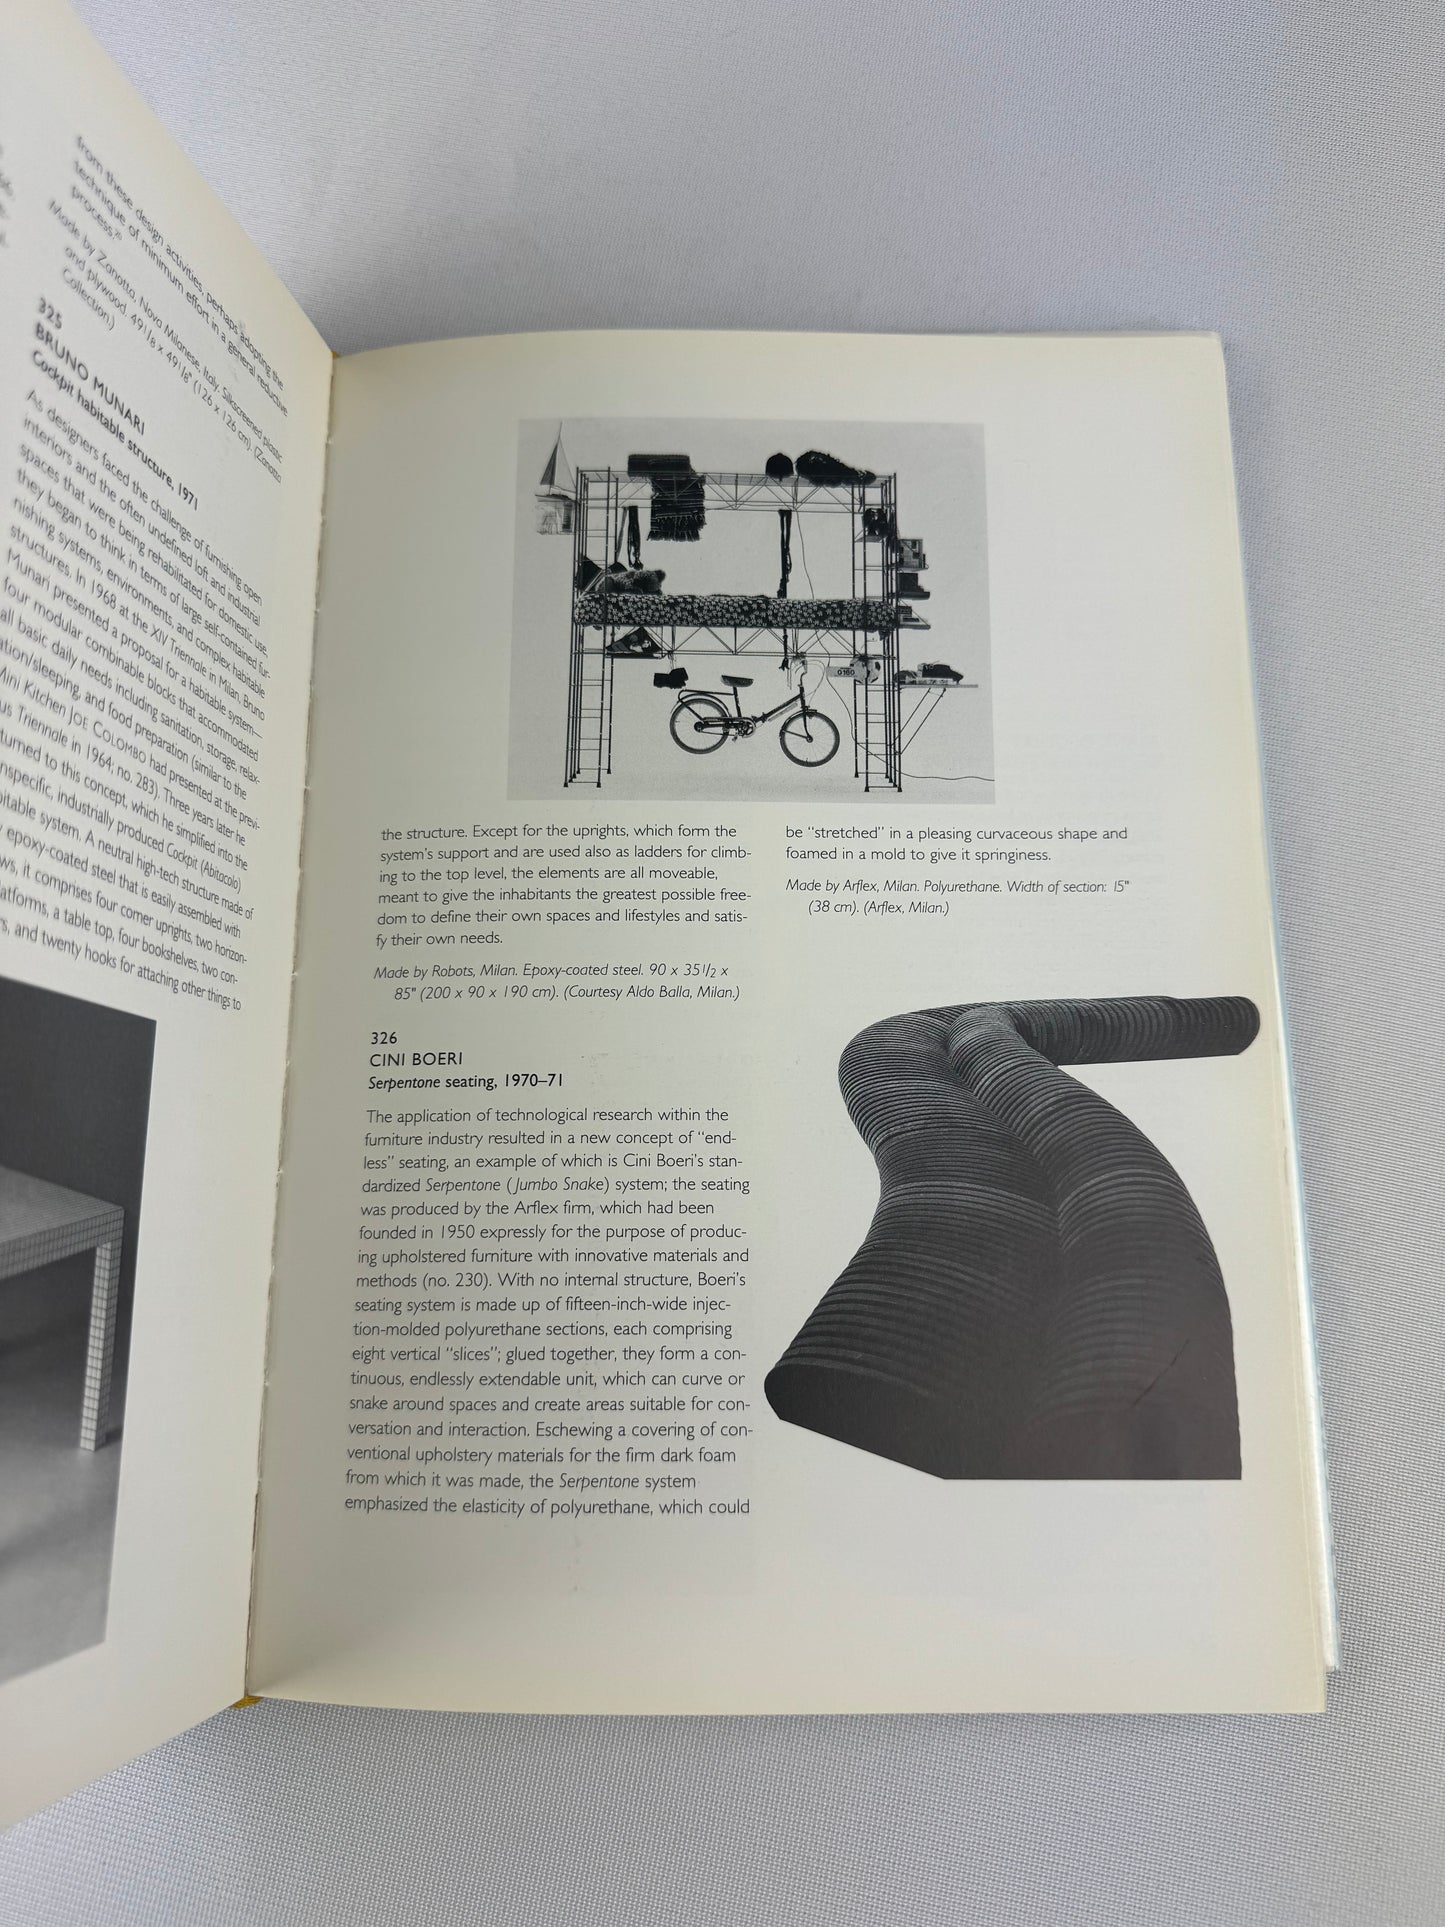 1993 Landmarks of Twentieth-Century Design: An Illustrated Handbook